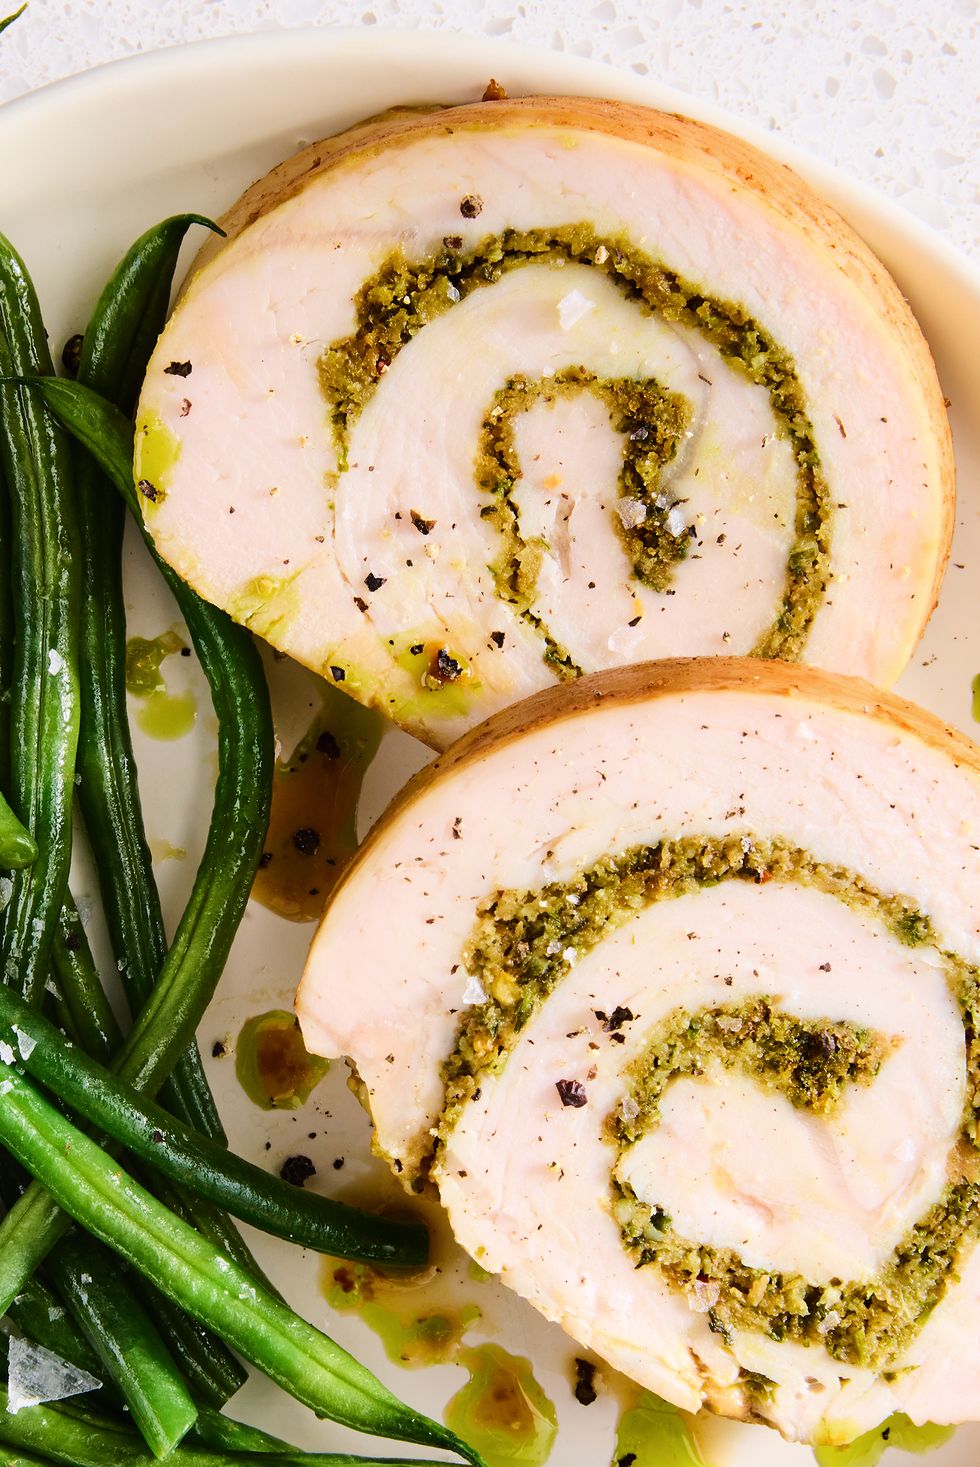 swirls of garlic and herb inside sliced turkey